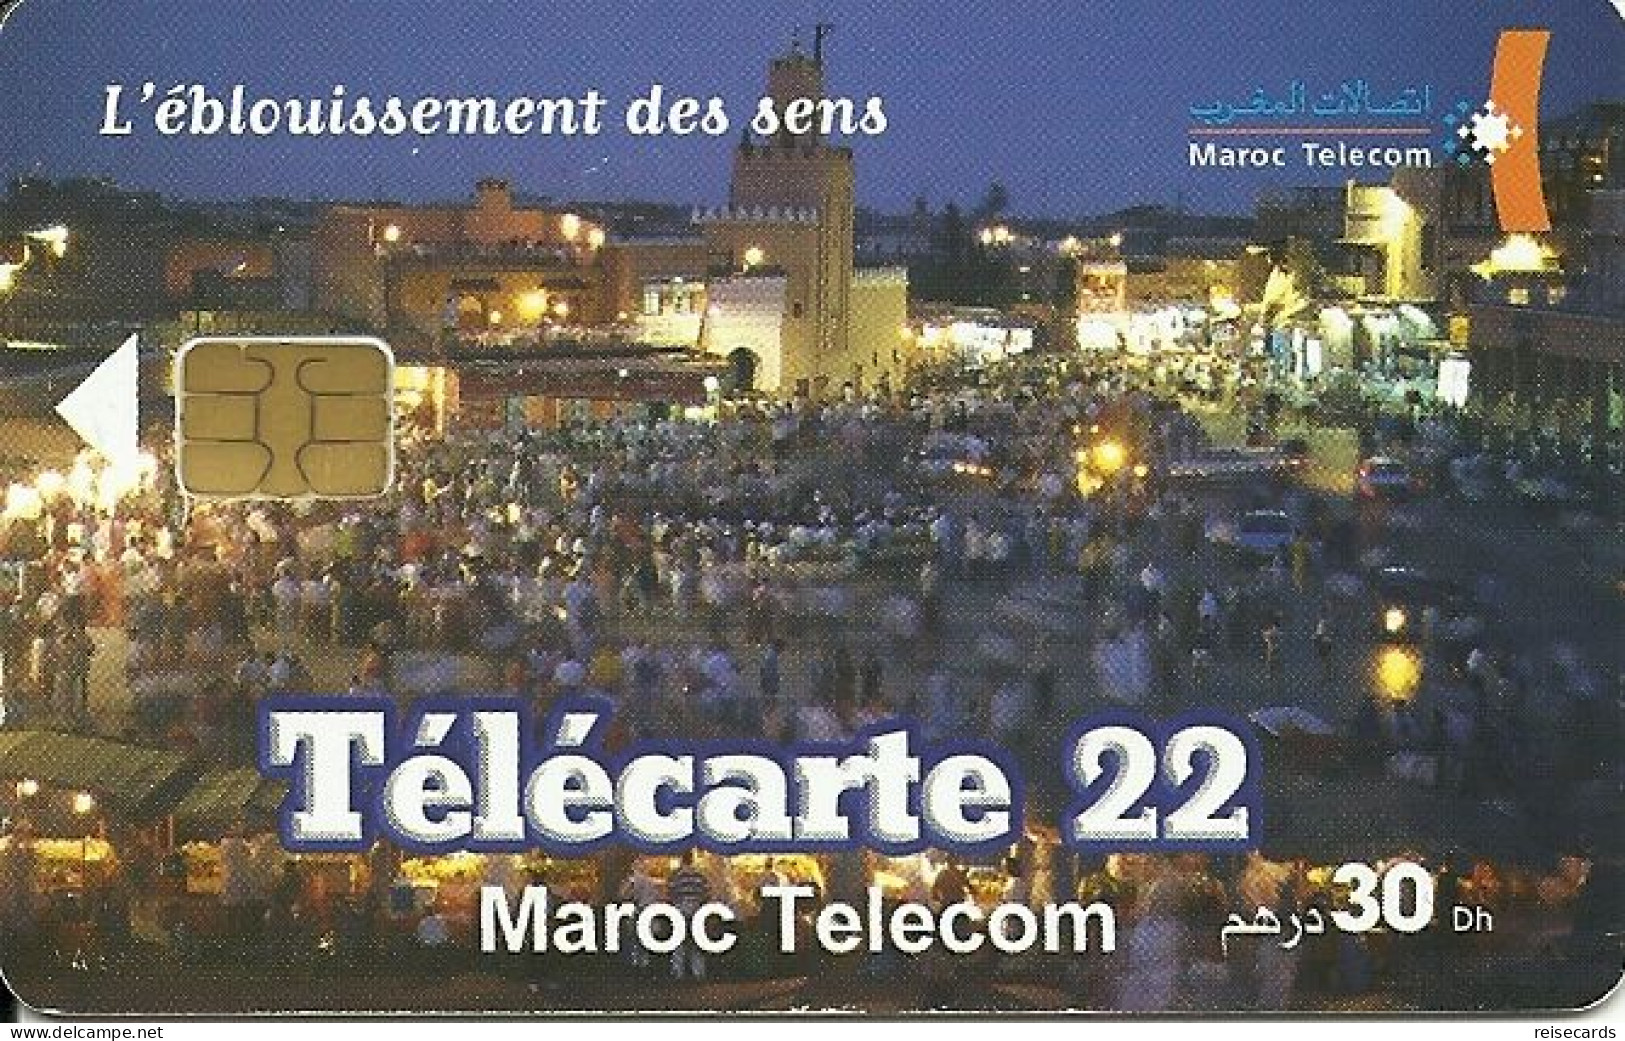 Morocco: Maroc Telecom - 2003 Place De Jamaâ Lafna, Marrakech - Marruecos